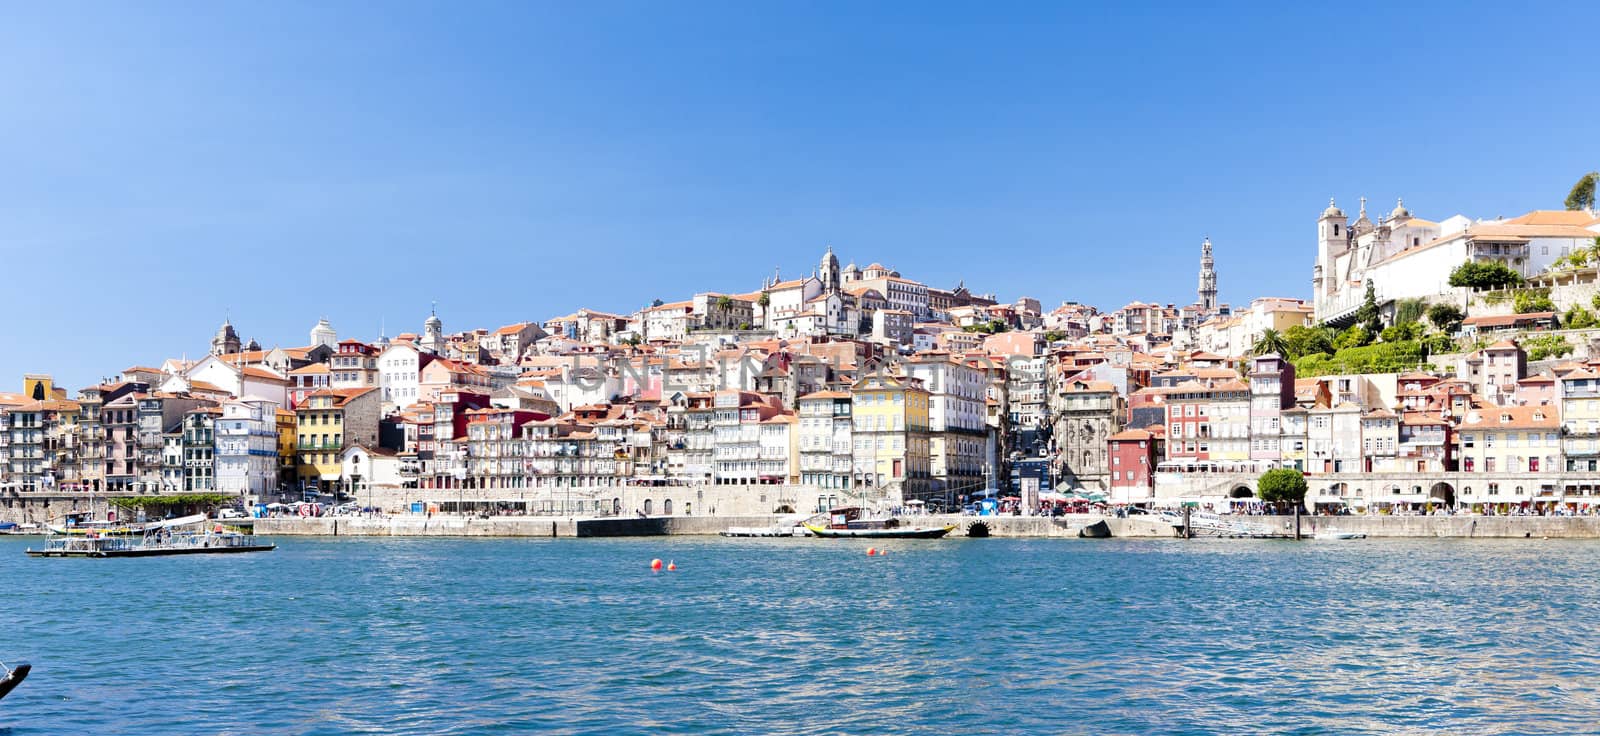 Porto, Portugal by phbcz